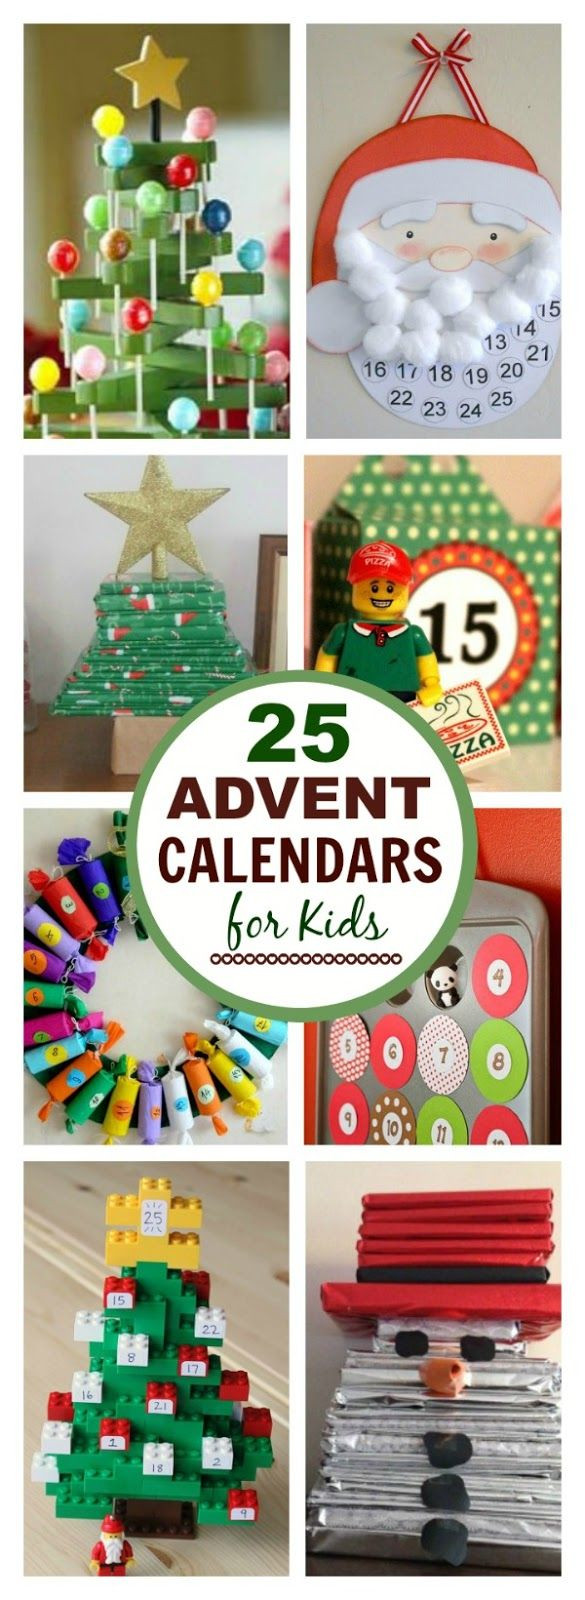 Best ideas about DIY Advent Calendar For Toddlers
. Save or Pin 1000 ideas about Homemade Advent Calendars on Pinterest Now.